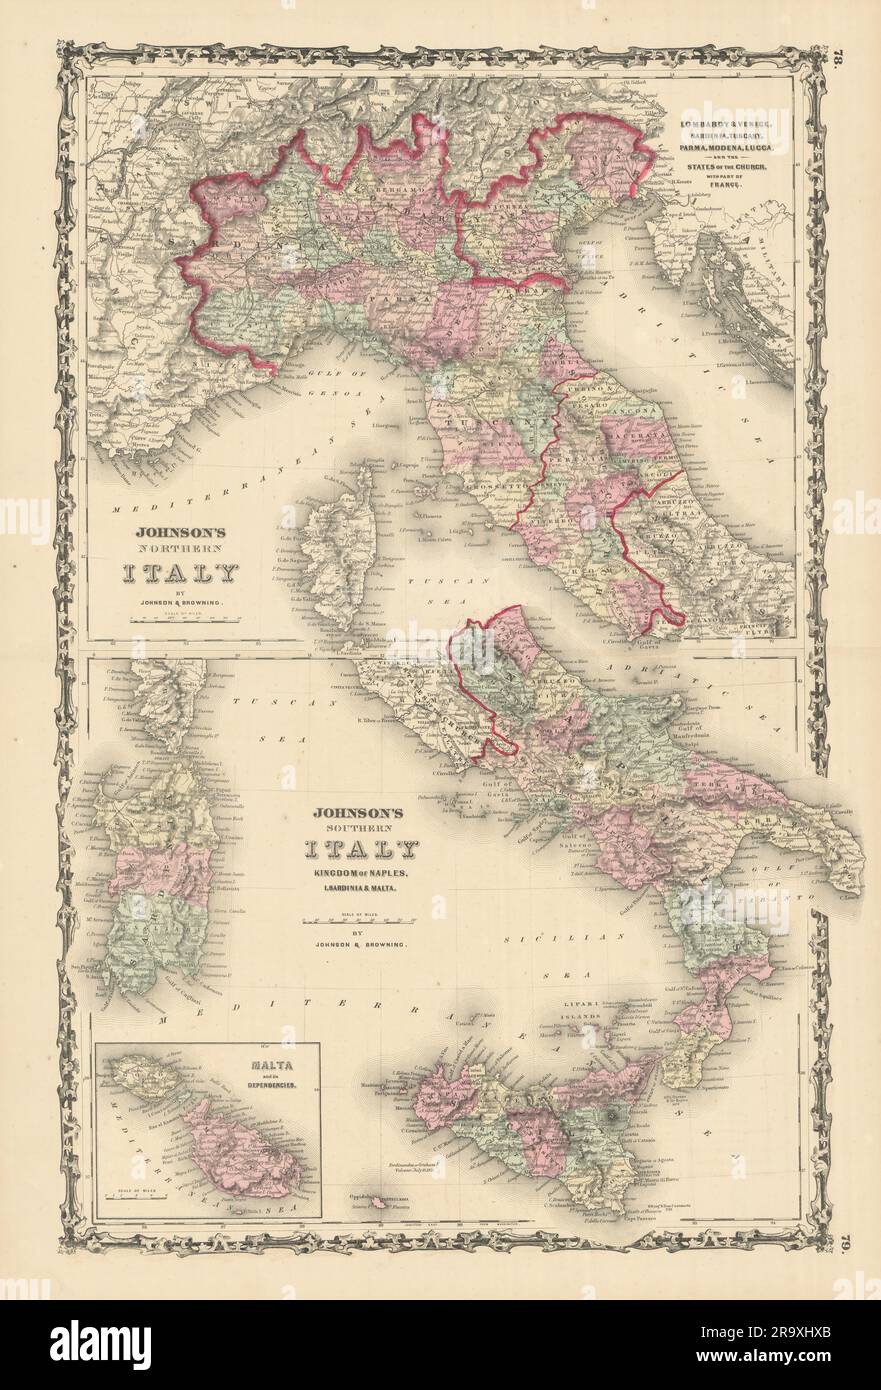 Johnson's Northern & Southern Italy. Malta. Unusual juxtaposition 1861 old map Stock Photo